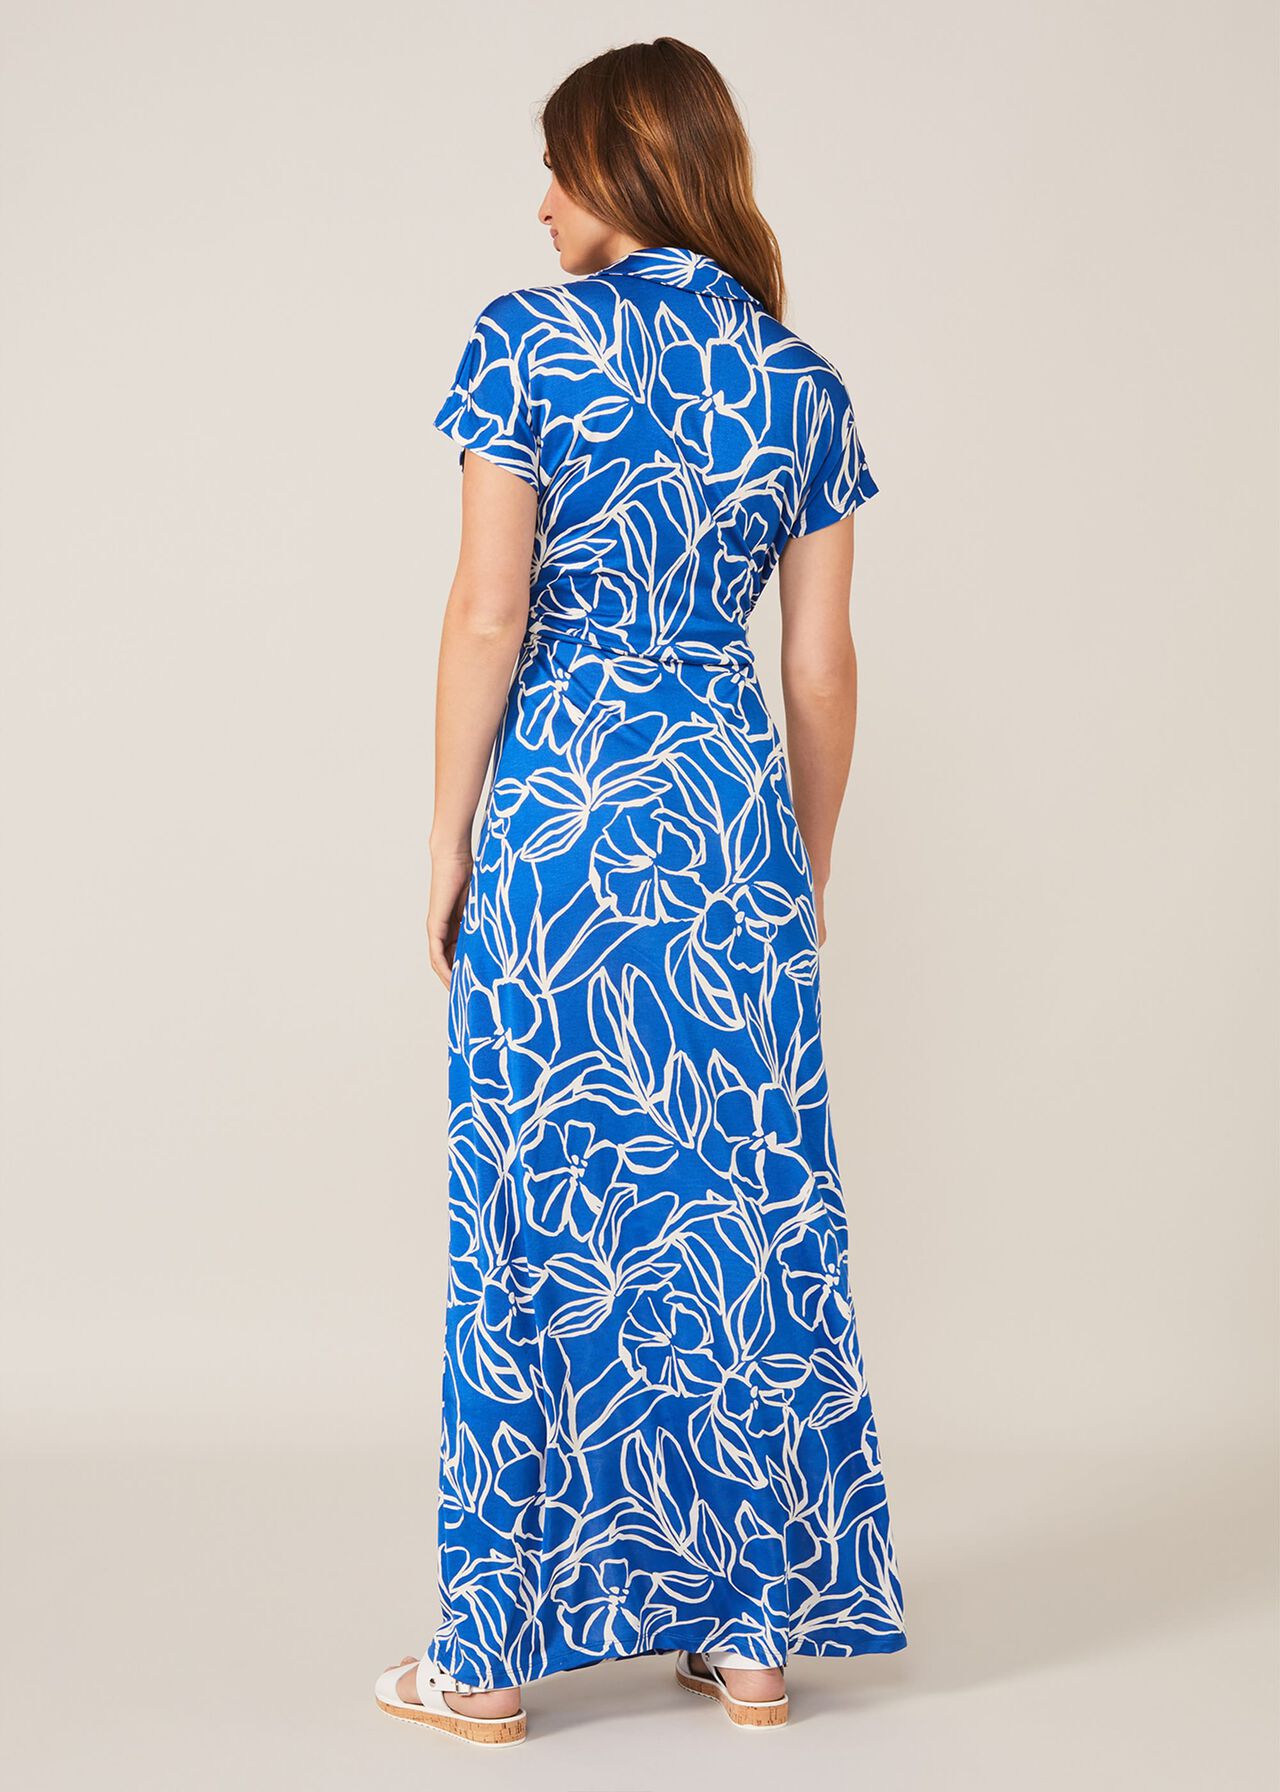 Sierra Linear Floral Maxi Dress